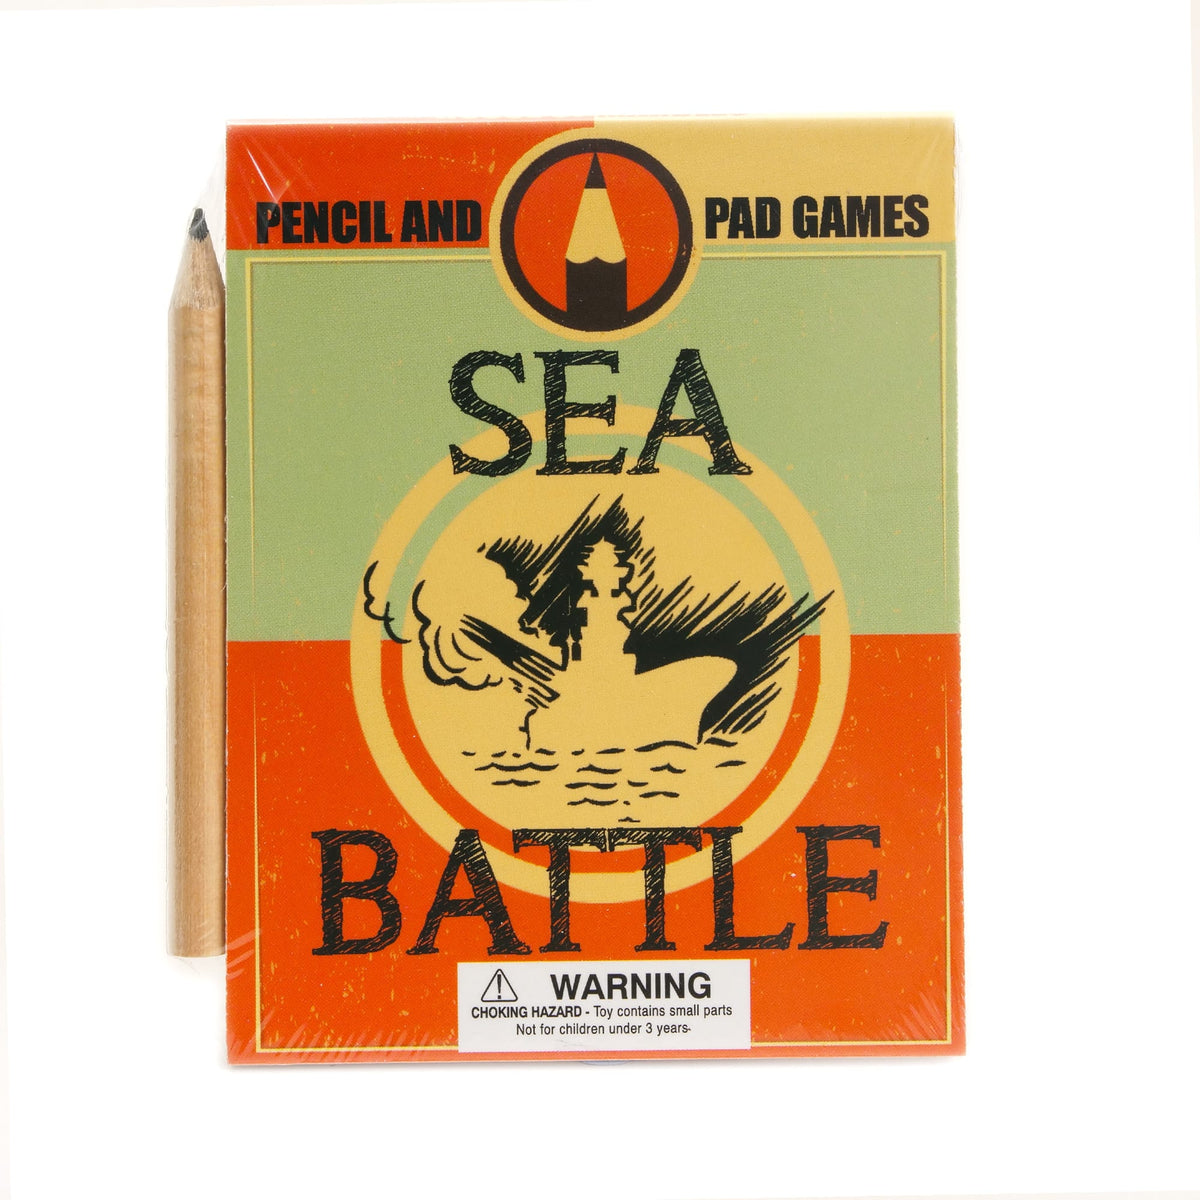 Pad & Pencil Games Cover